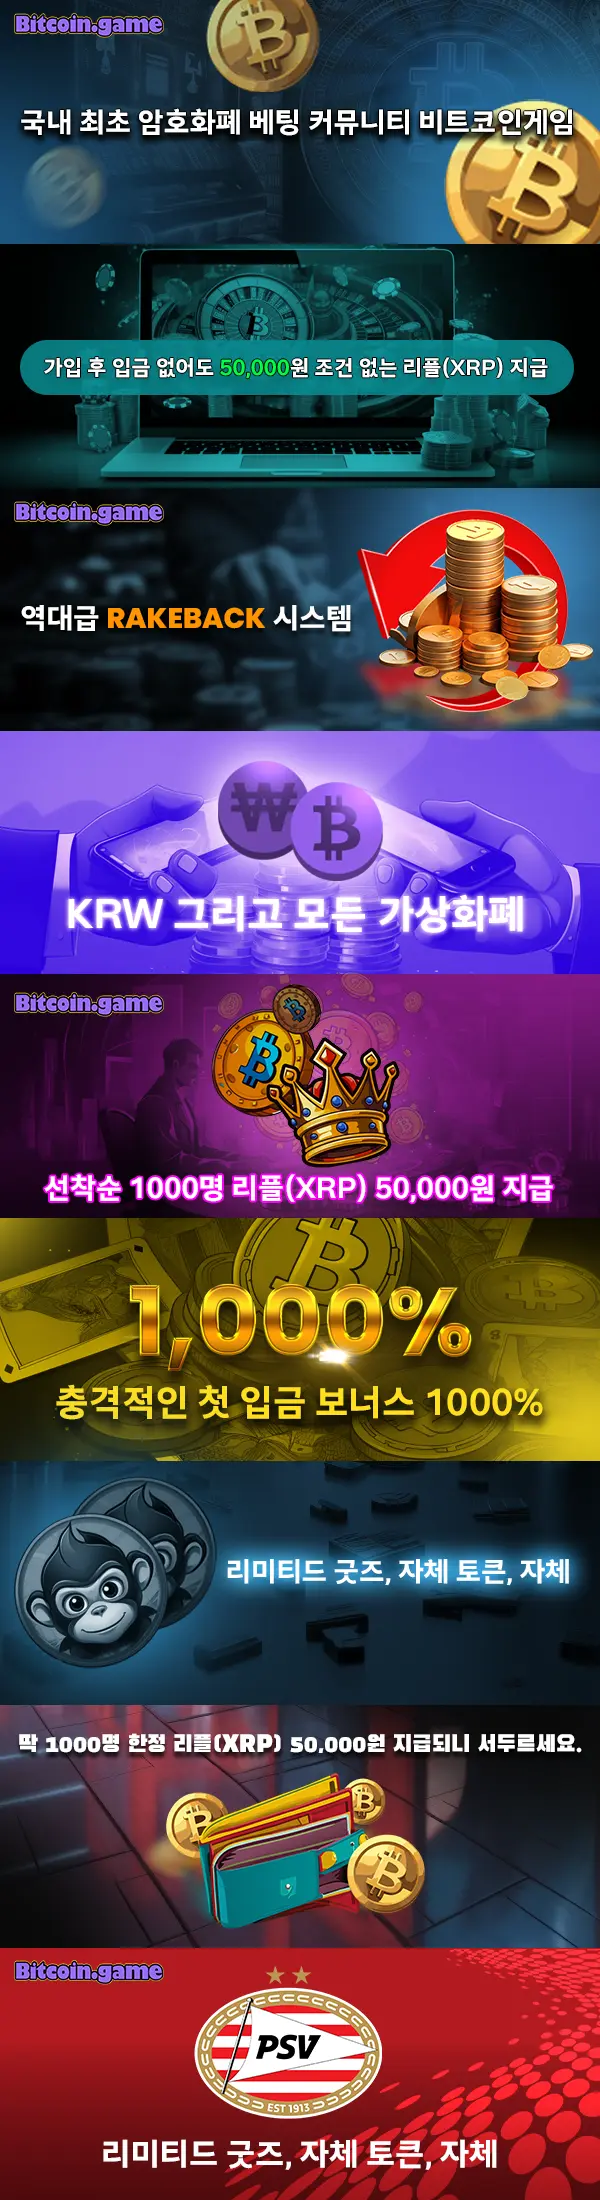 Bitcoin Banner 2.png